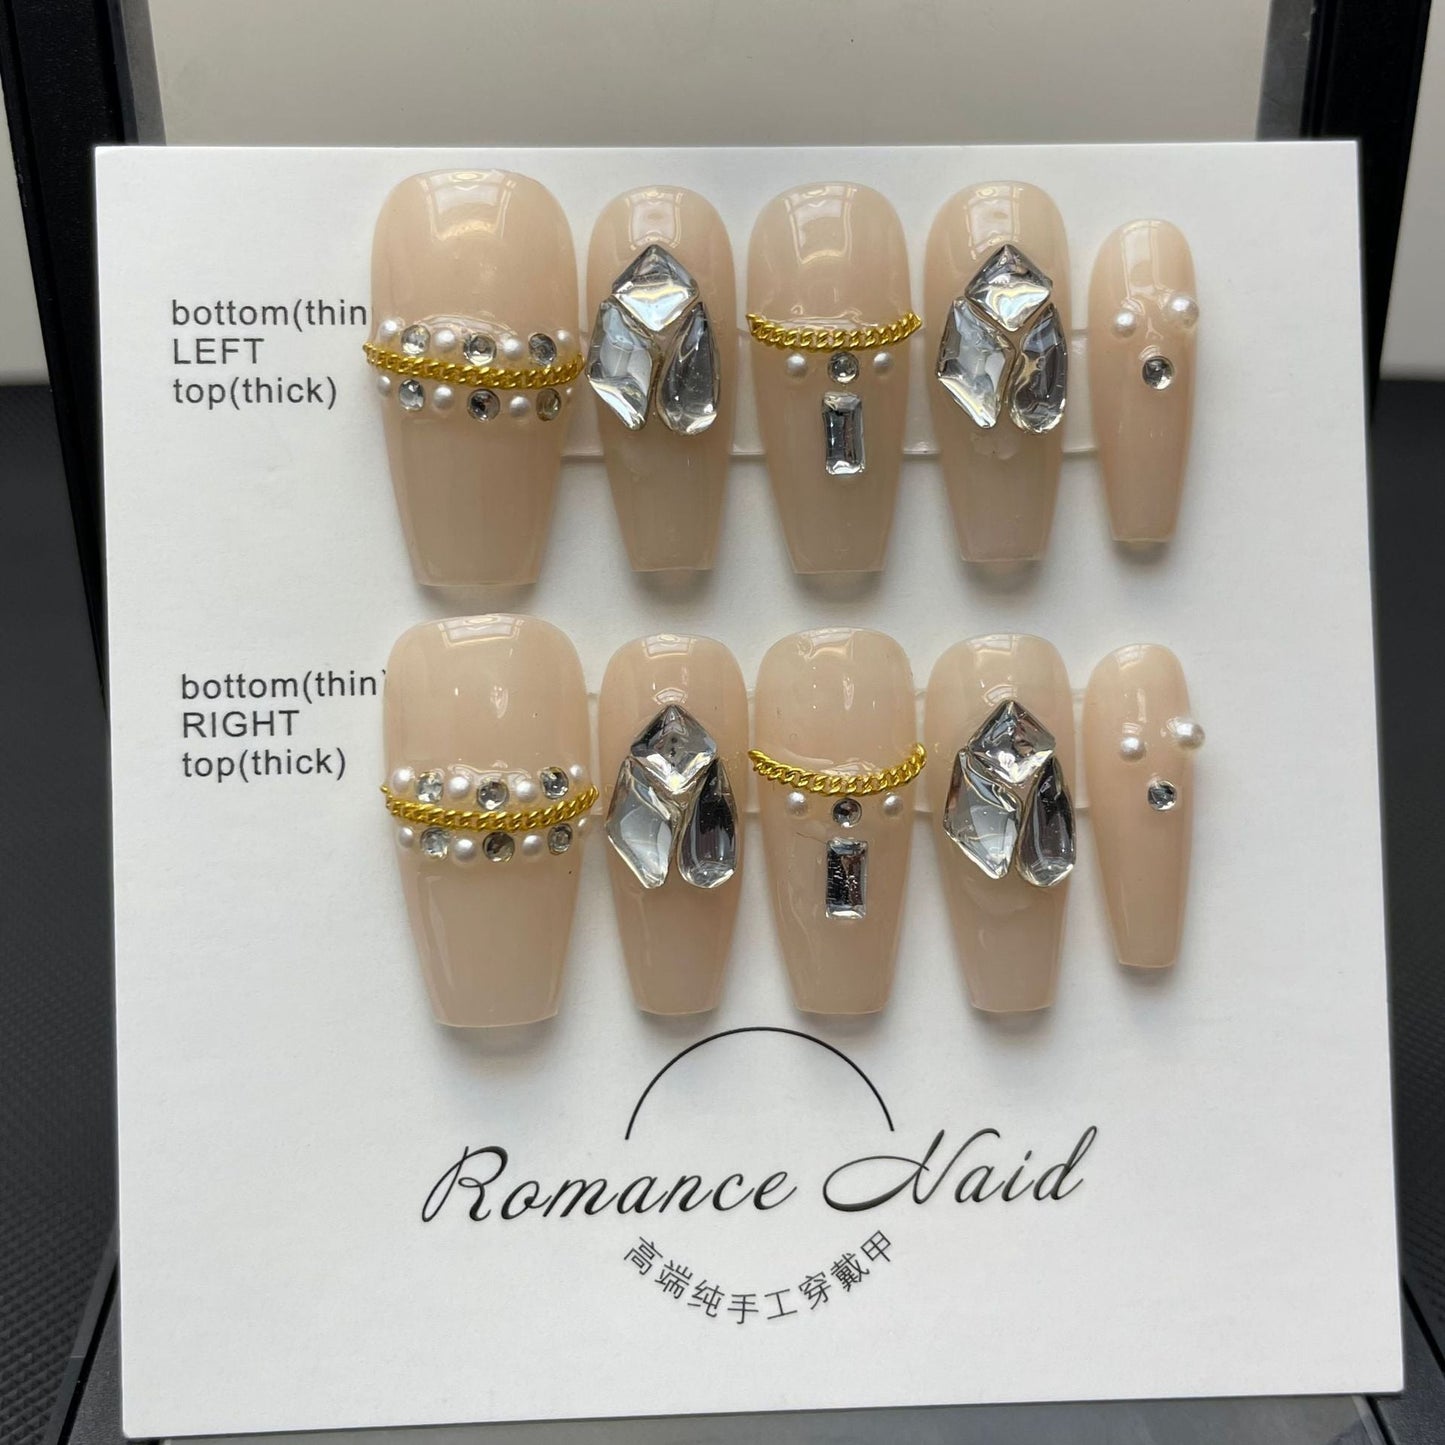 642 Rhinestone press on nails 100% handmade false nails nude color